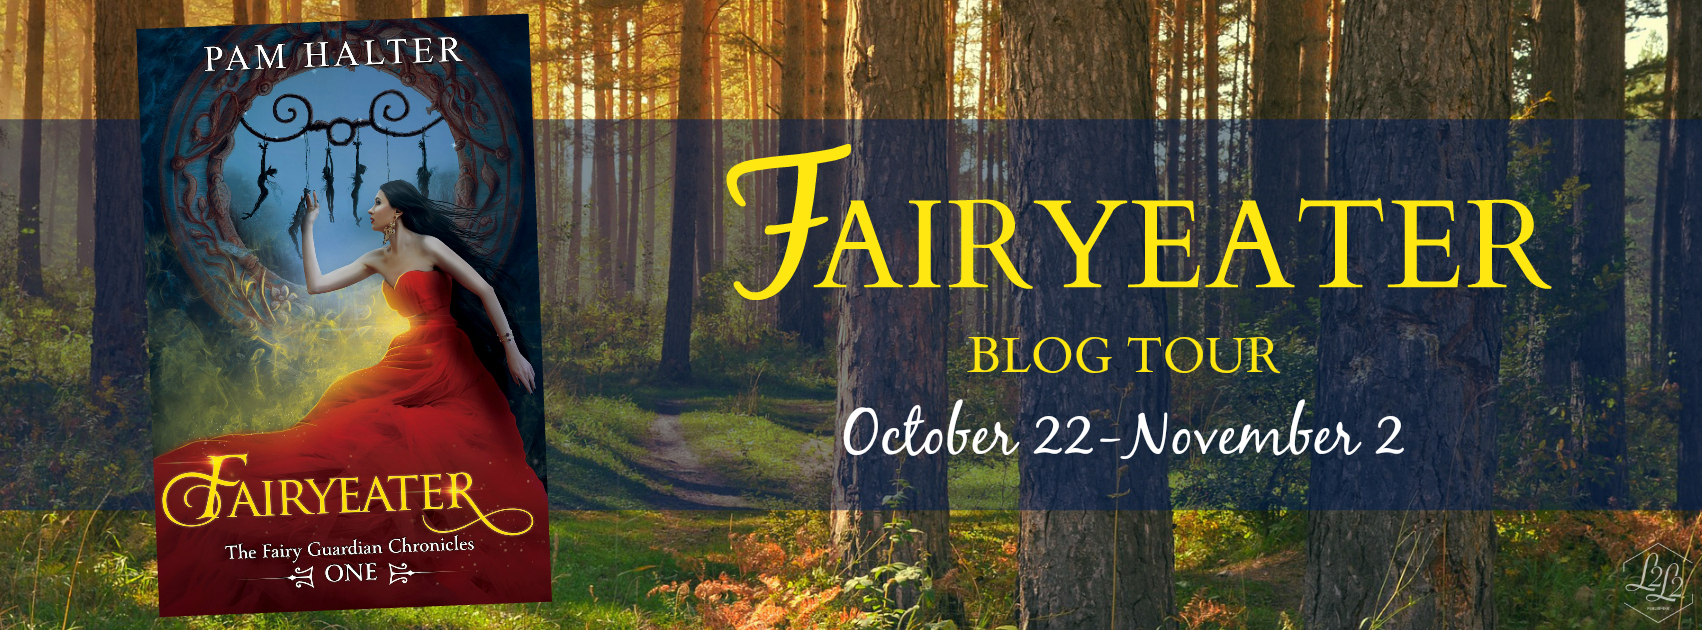 Fairyeater Blog Tour Mock-Up.jpg